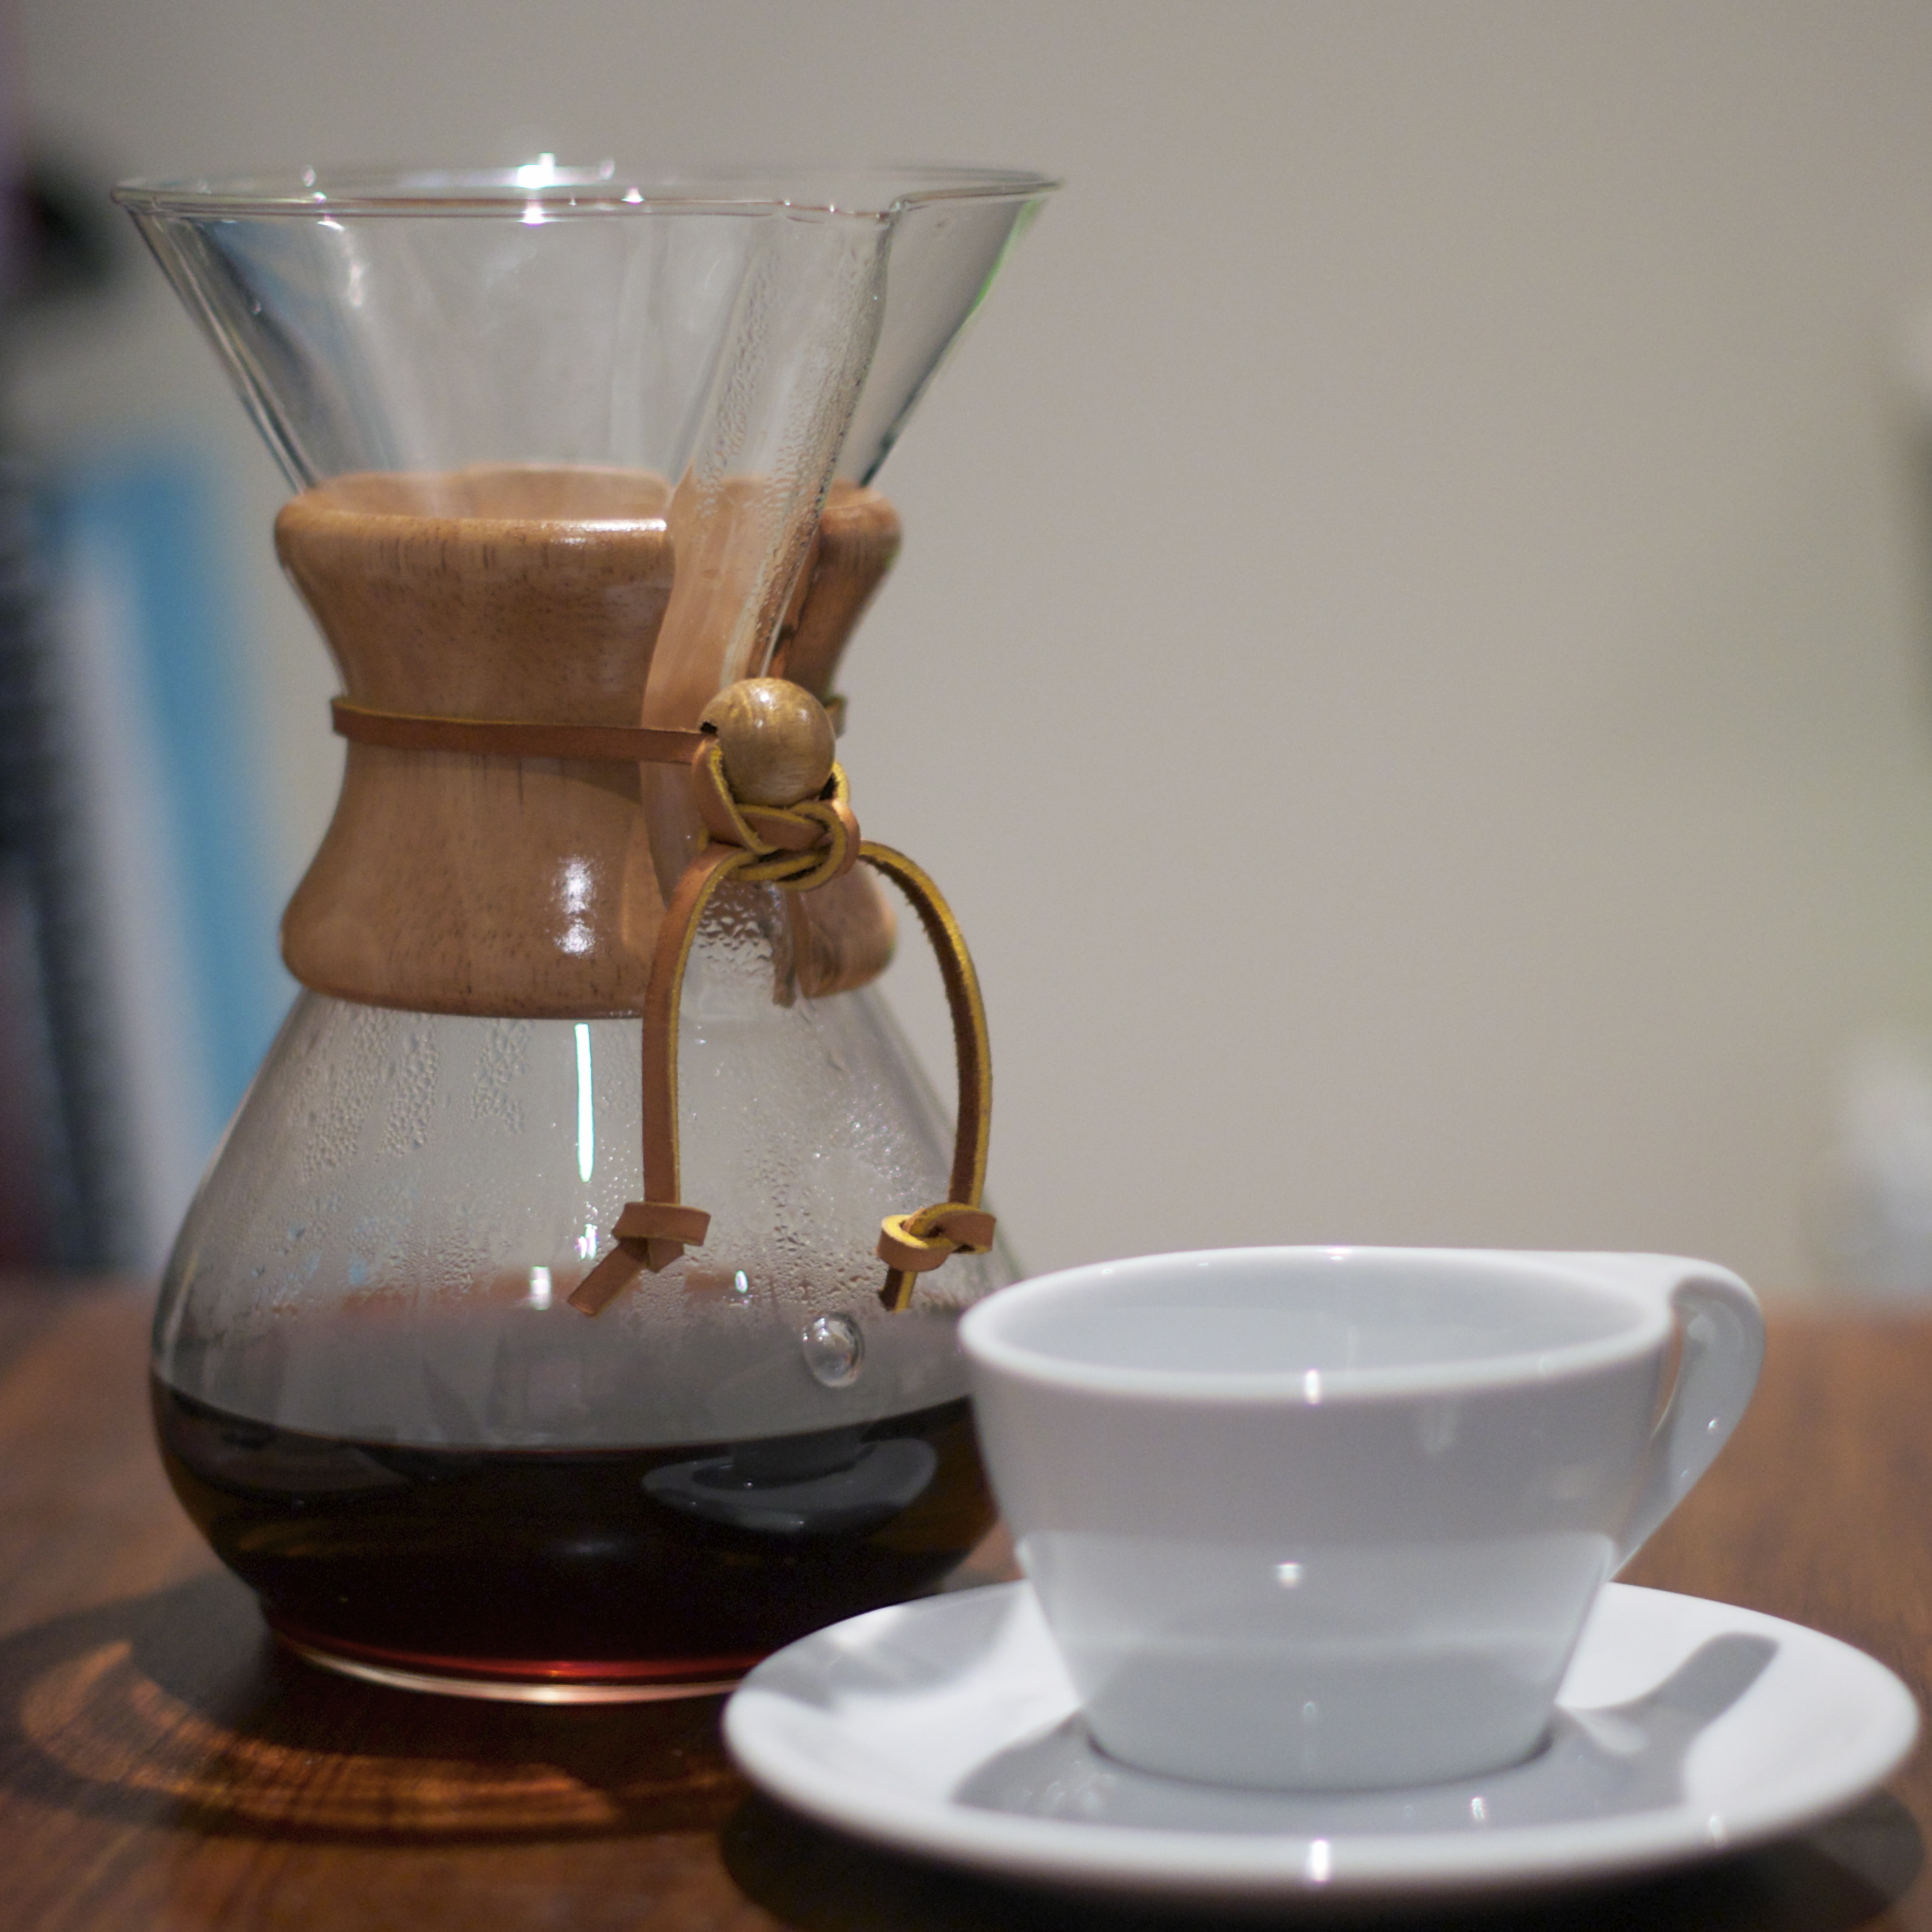 Coffee Brewing Methods: 19 Ways to Brew Amazing Coffee